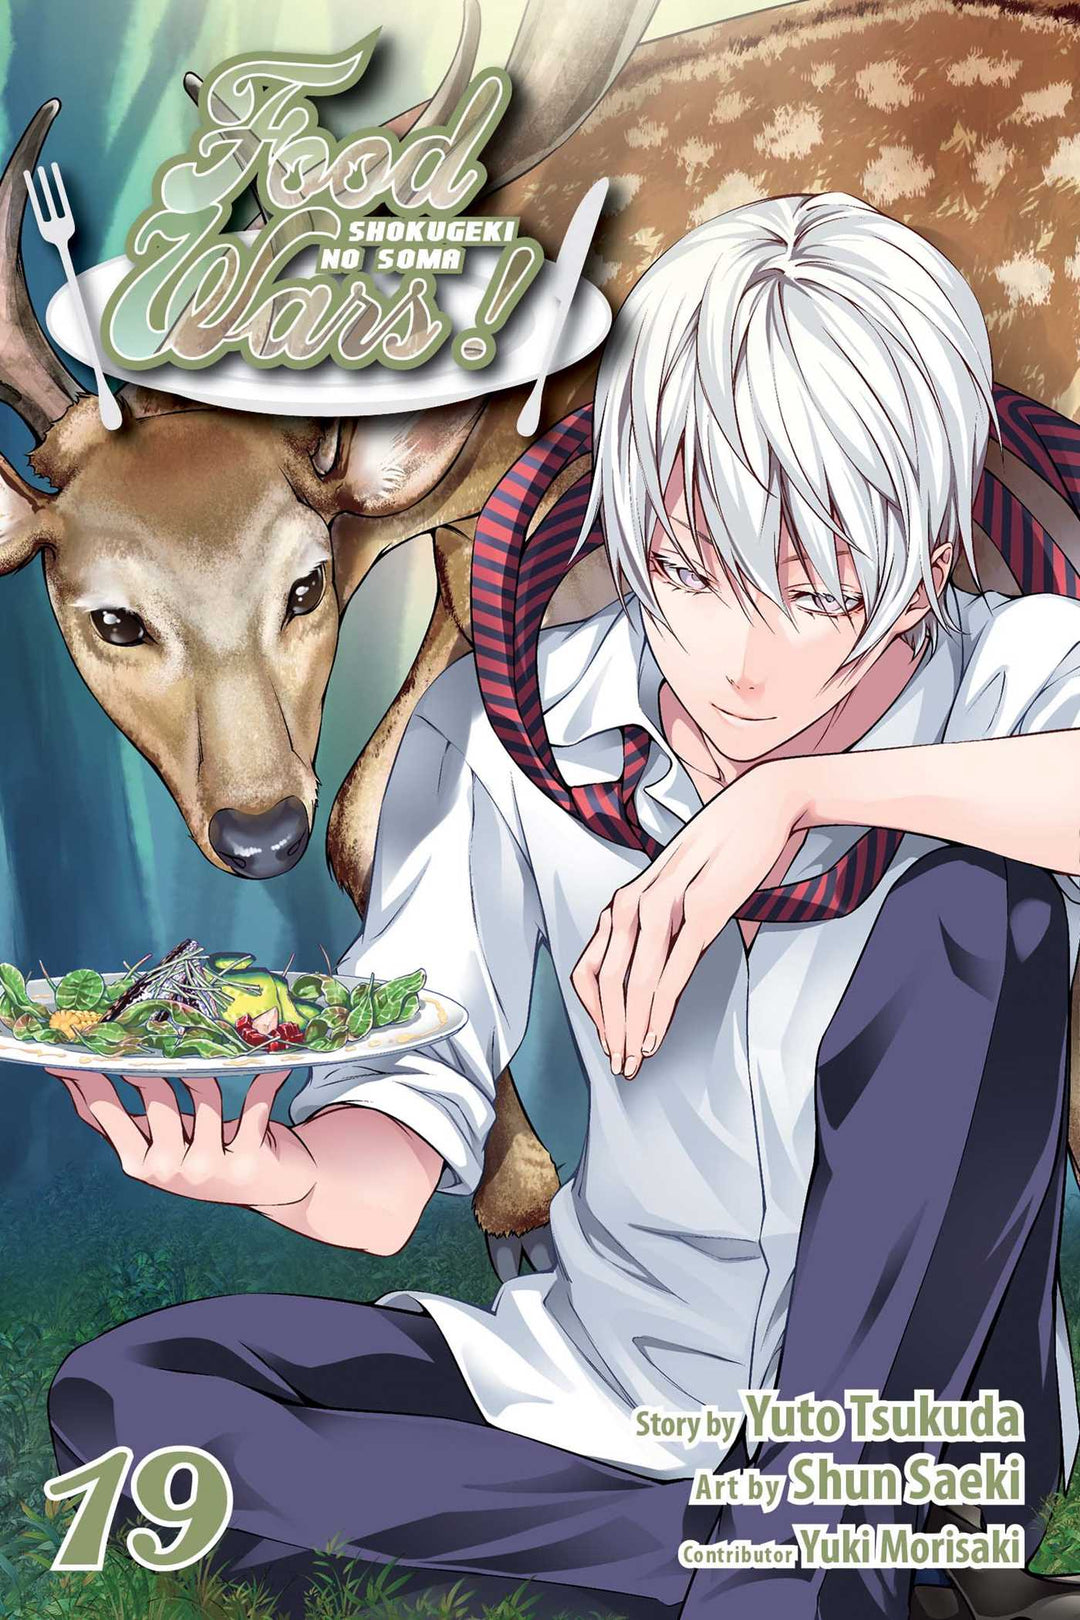 Food Wars!: Shokugeki no Soma, Vol. 19 - Manga Mate